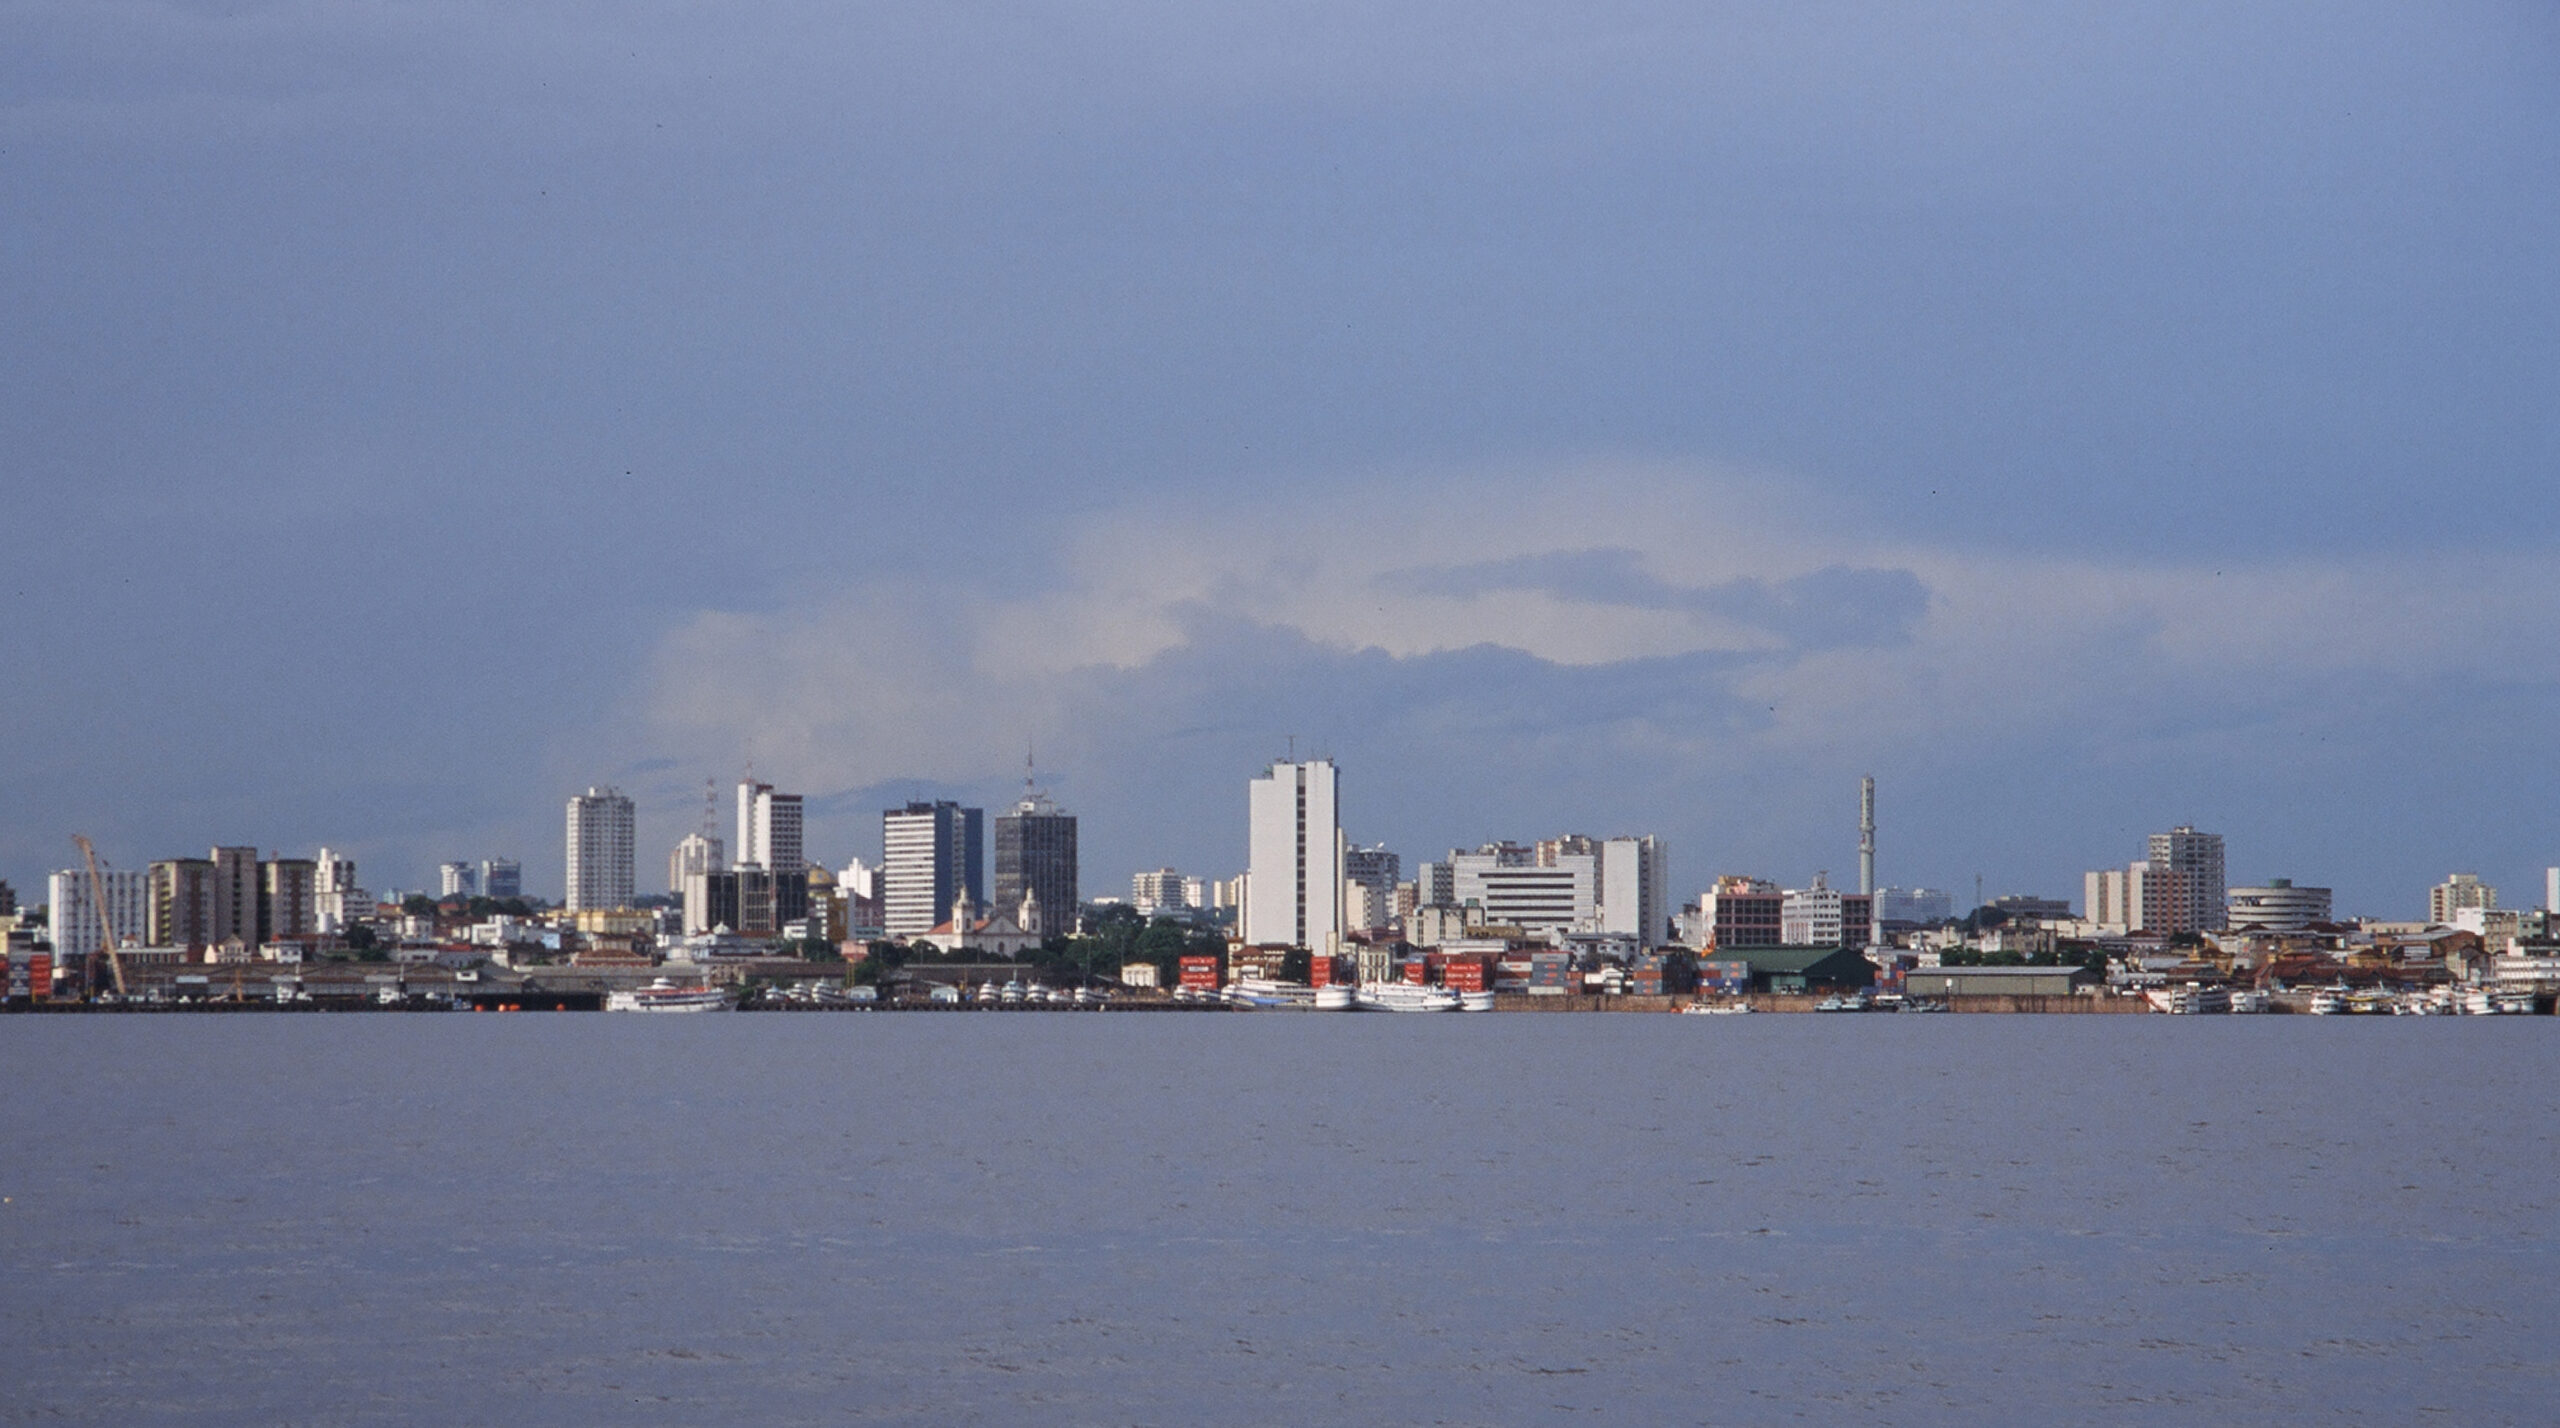 Manaus free trade zone